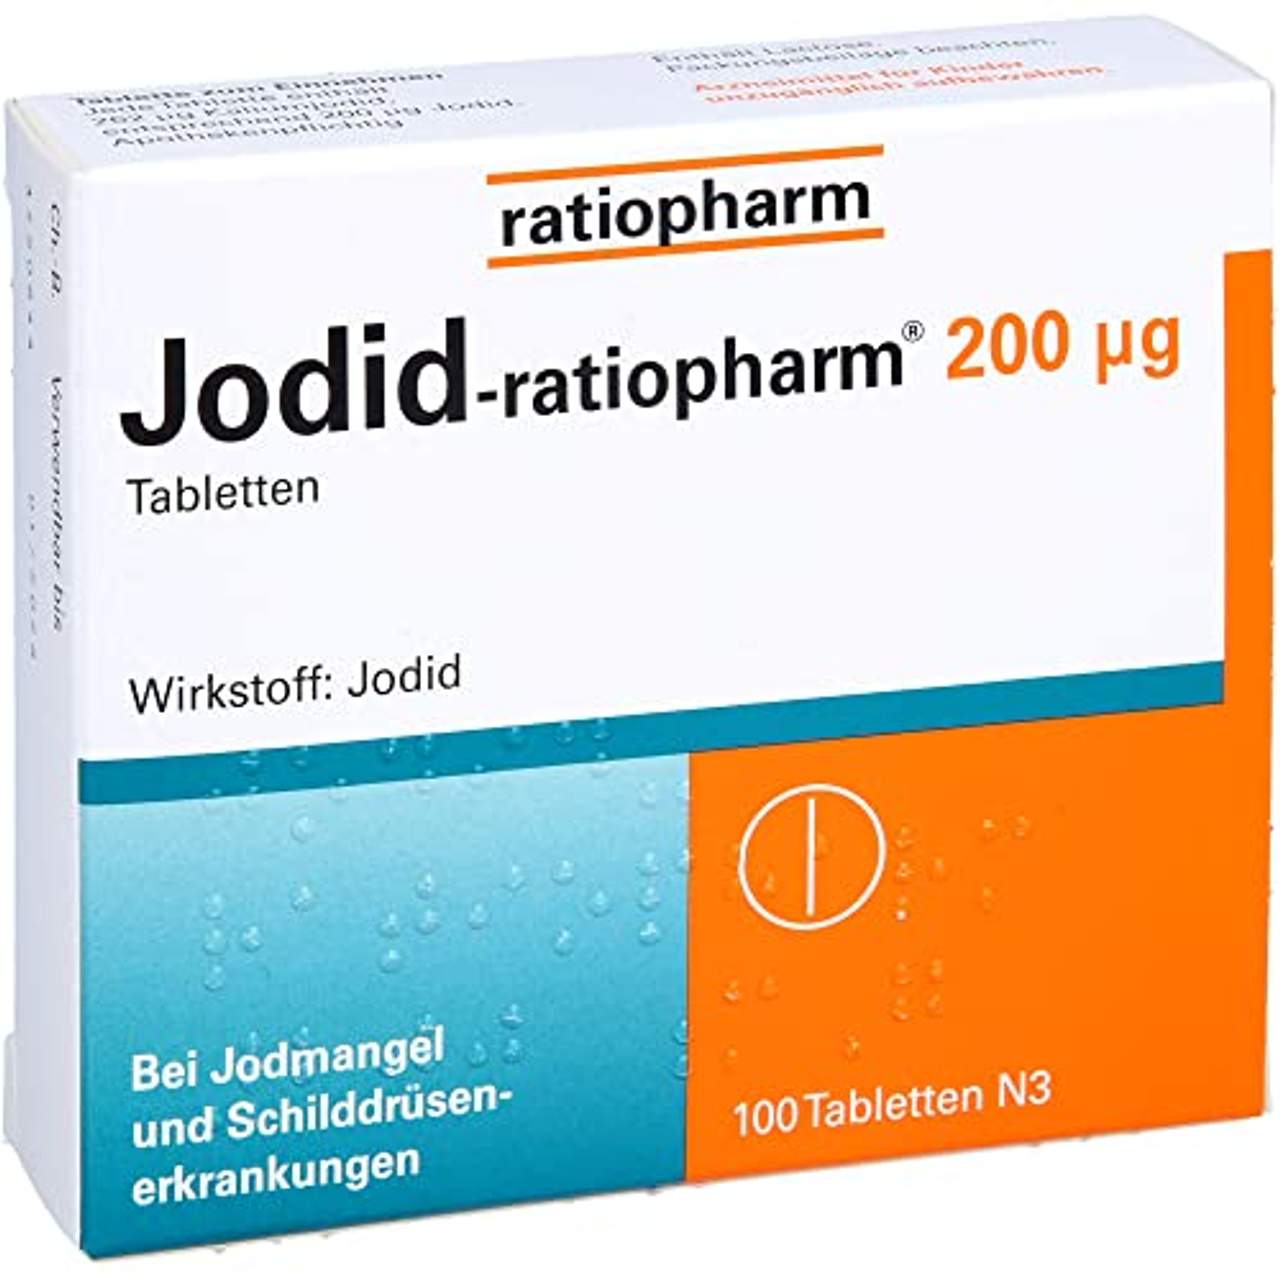 Jodid-ratiopharm 200 μg Tabletten